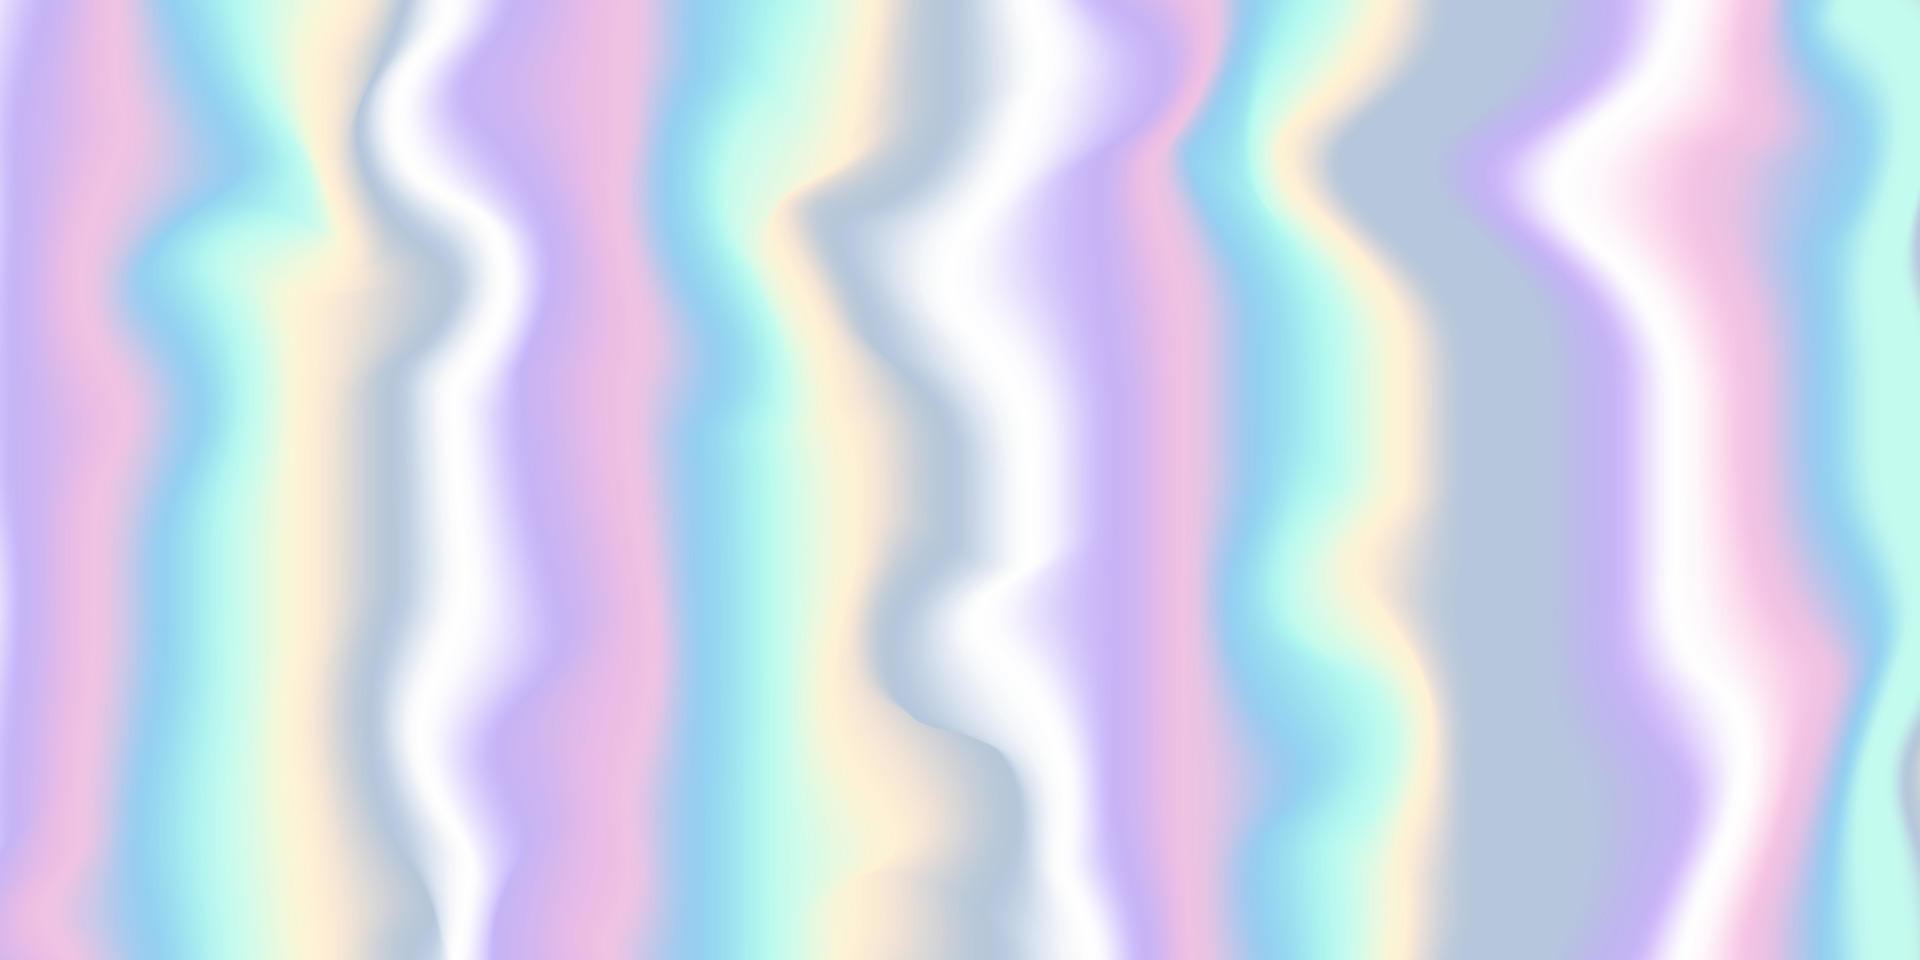 horisontell levande holografi effekt bakgrund. abstrakt regnbåge pastellmönster. ljus oskärpa dekoration holografisk bakgrund. trendig modern tapetdesign. vektor illustration.